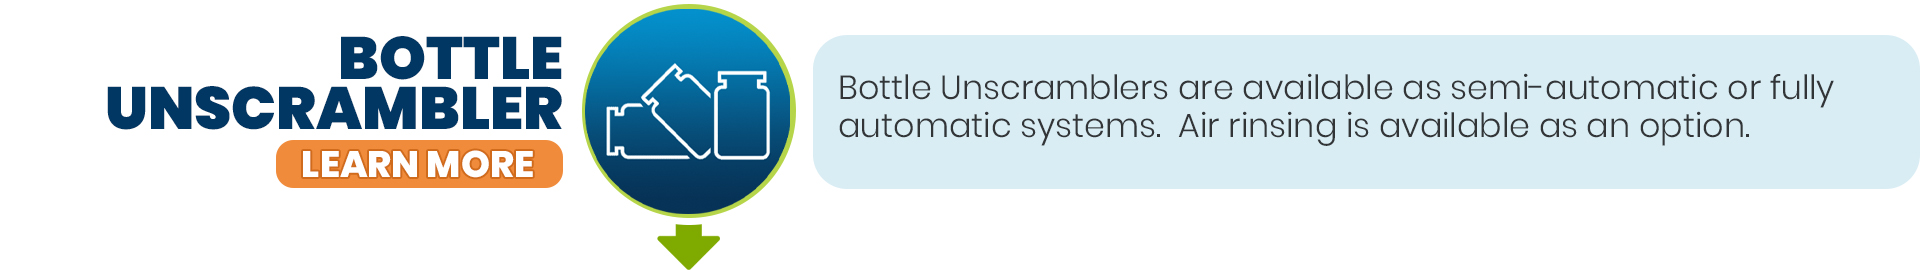 Bottle Unscrambler - Block 2